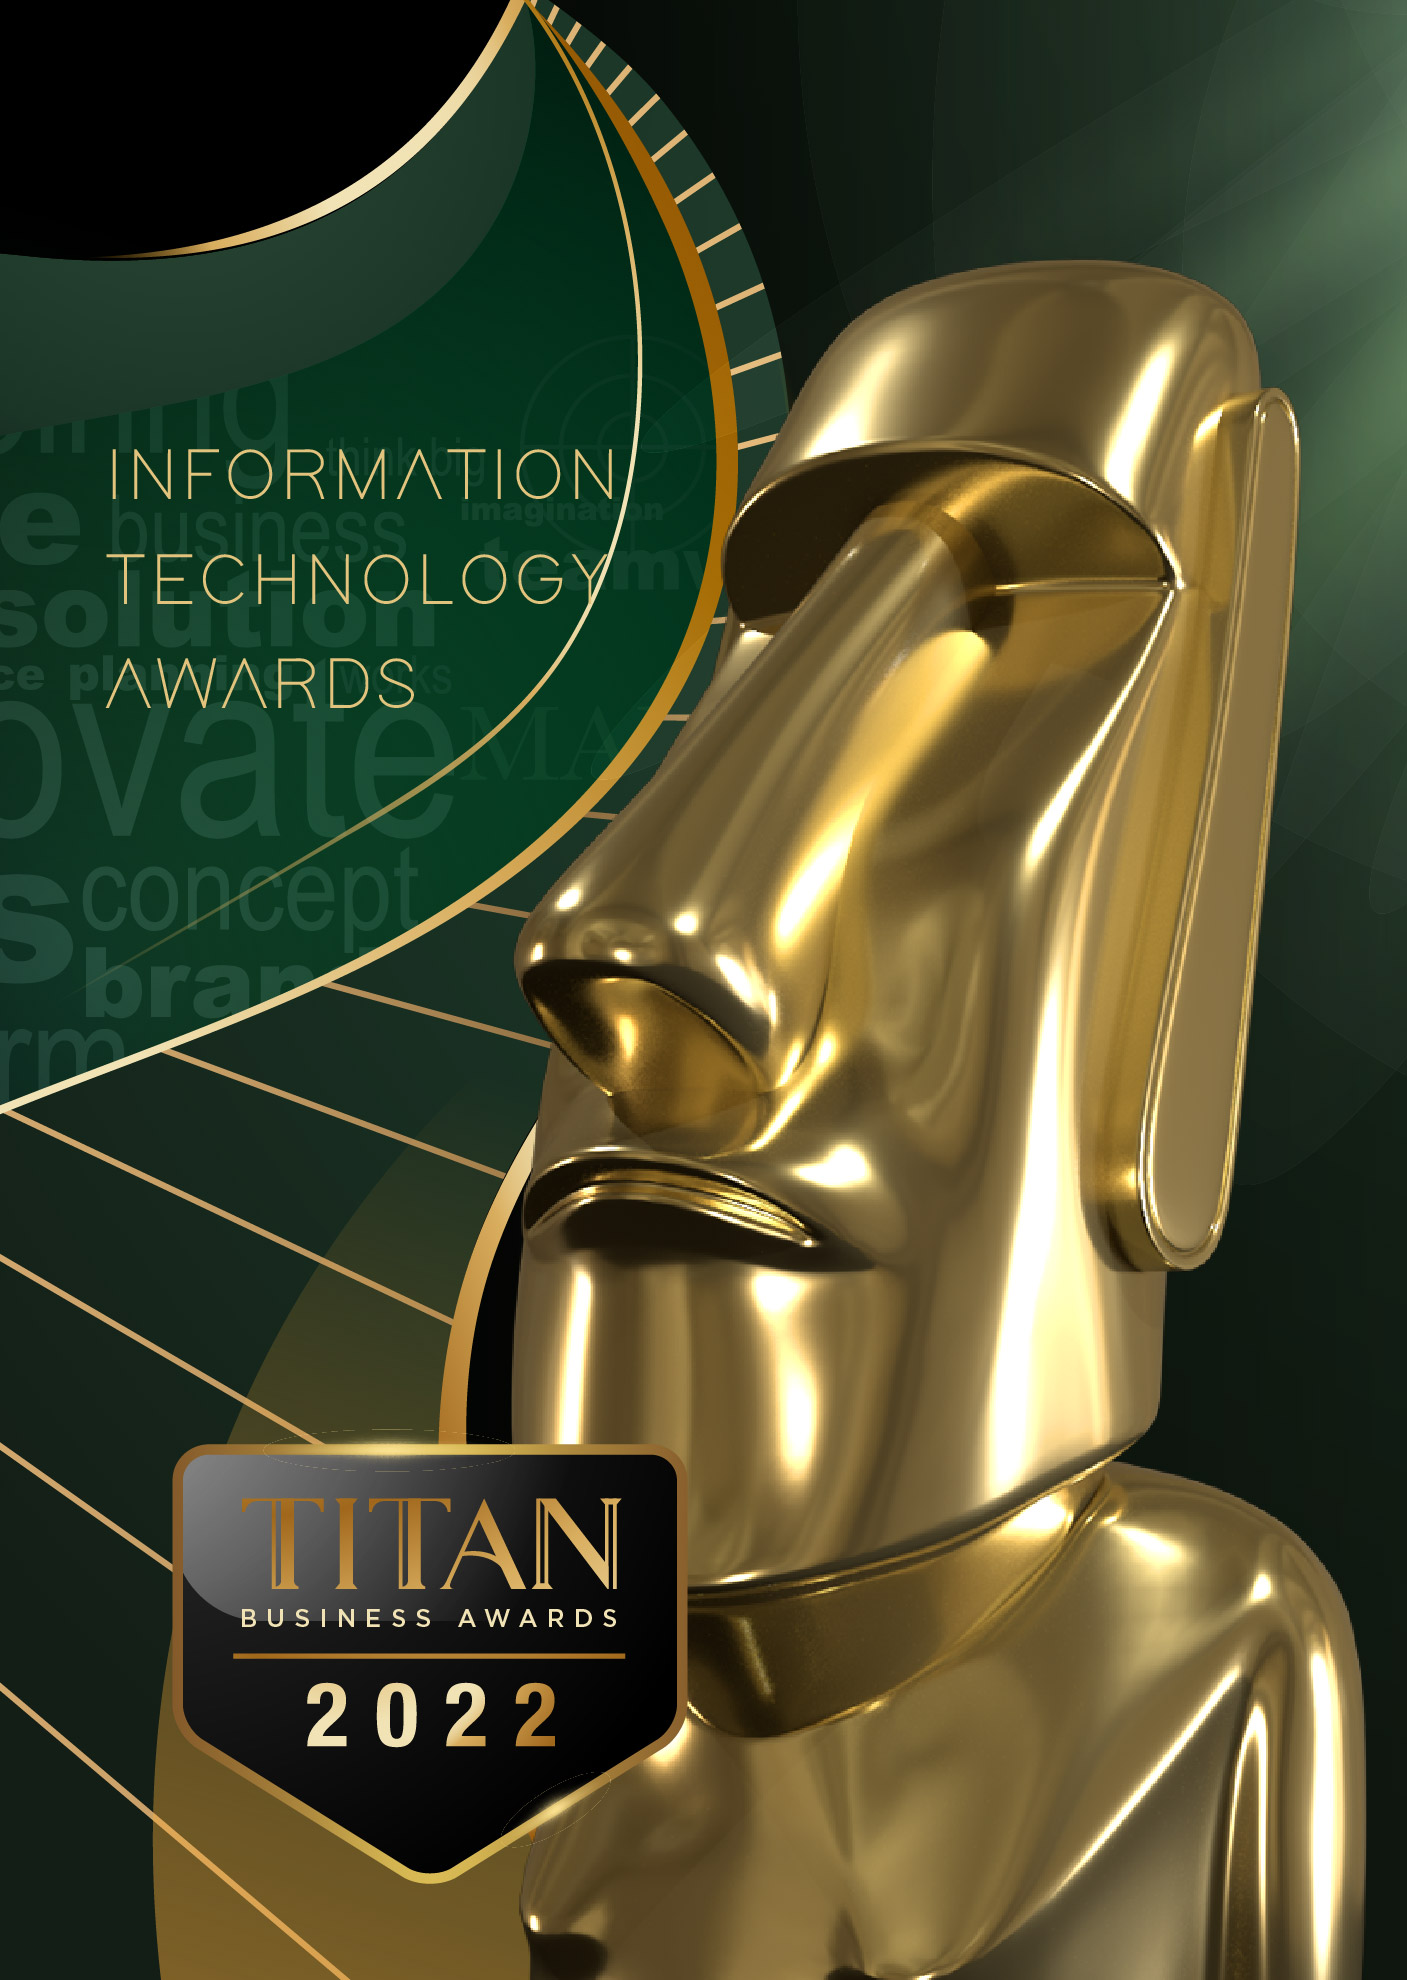 TITAN Information Technology Awards | International Business Awards | IT Awards